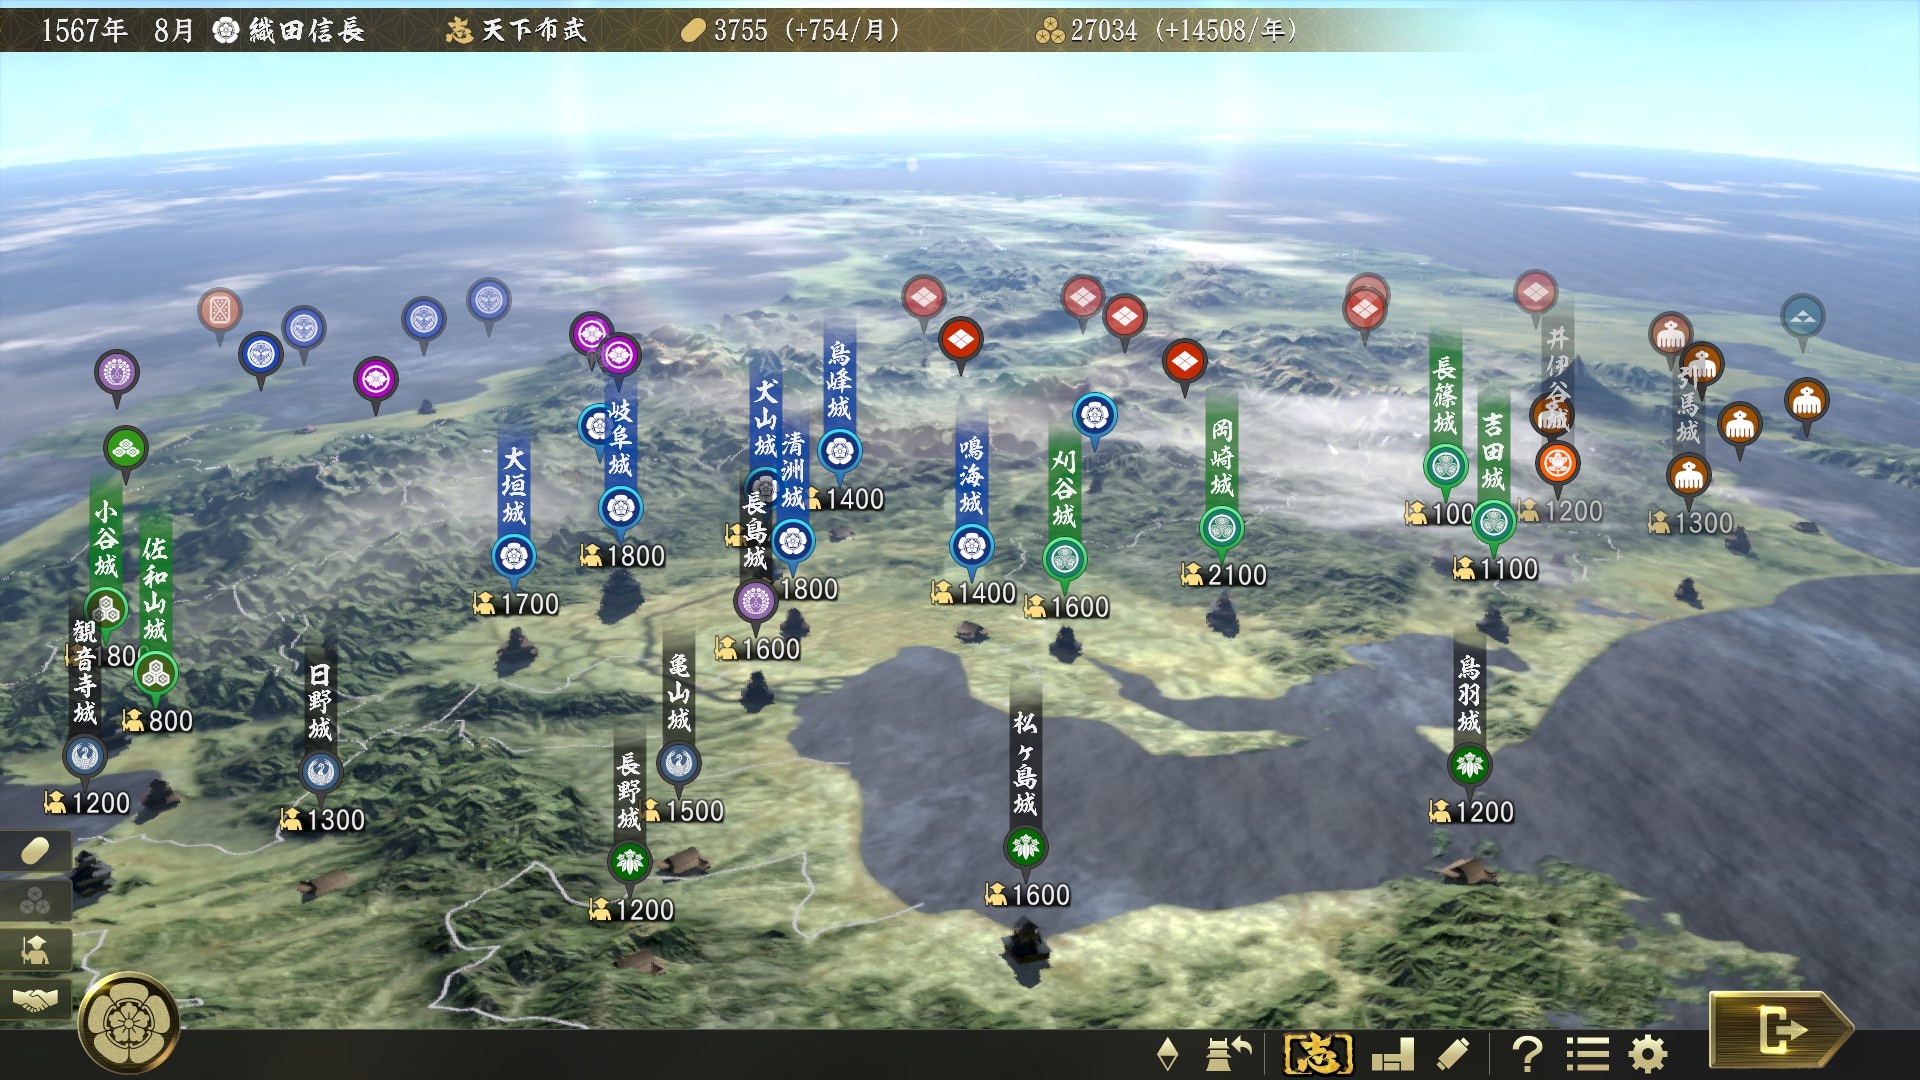 Nobunaga's Ambition: Taishi / 信長の野望･大志 Steam Key GLOBAL - 2